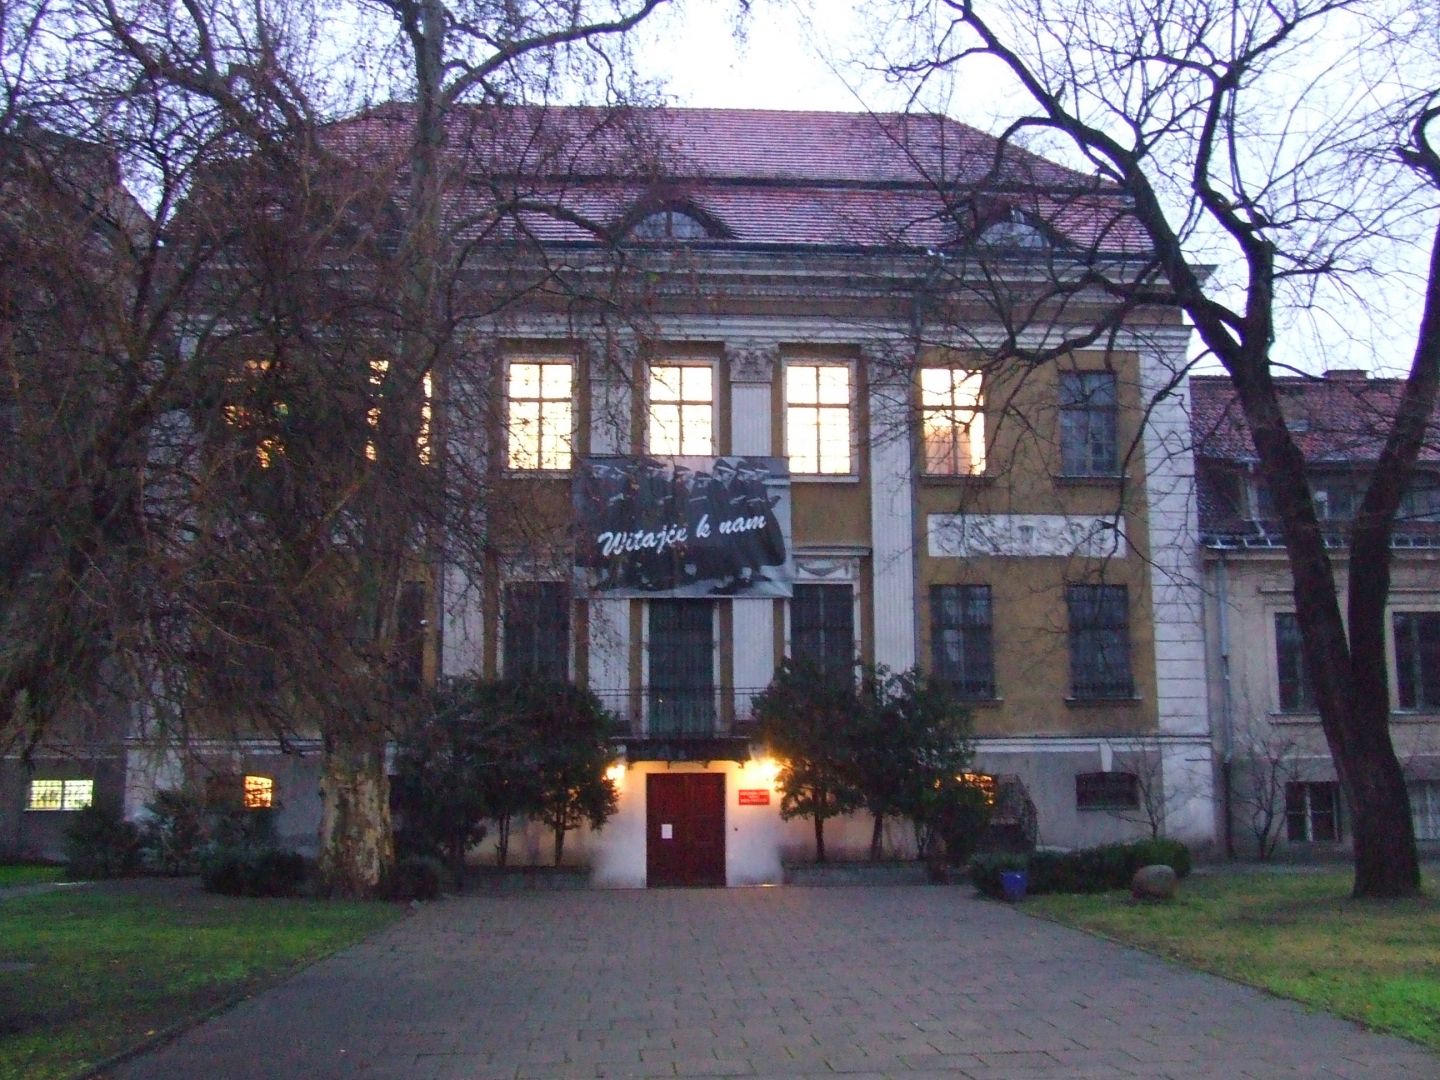 Ethnographic Museum in Poznań